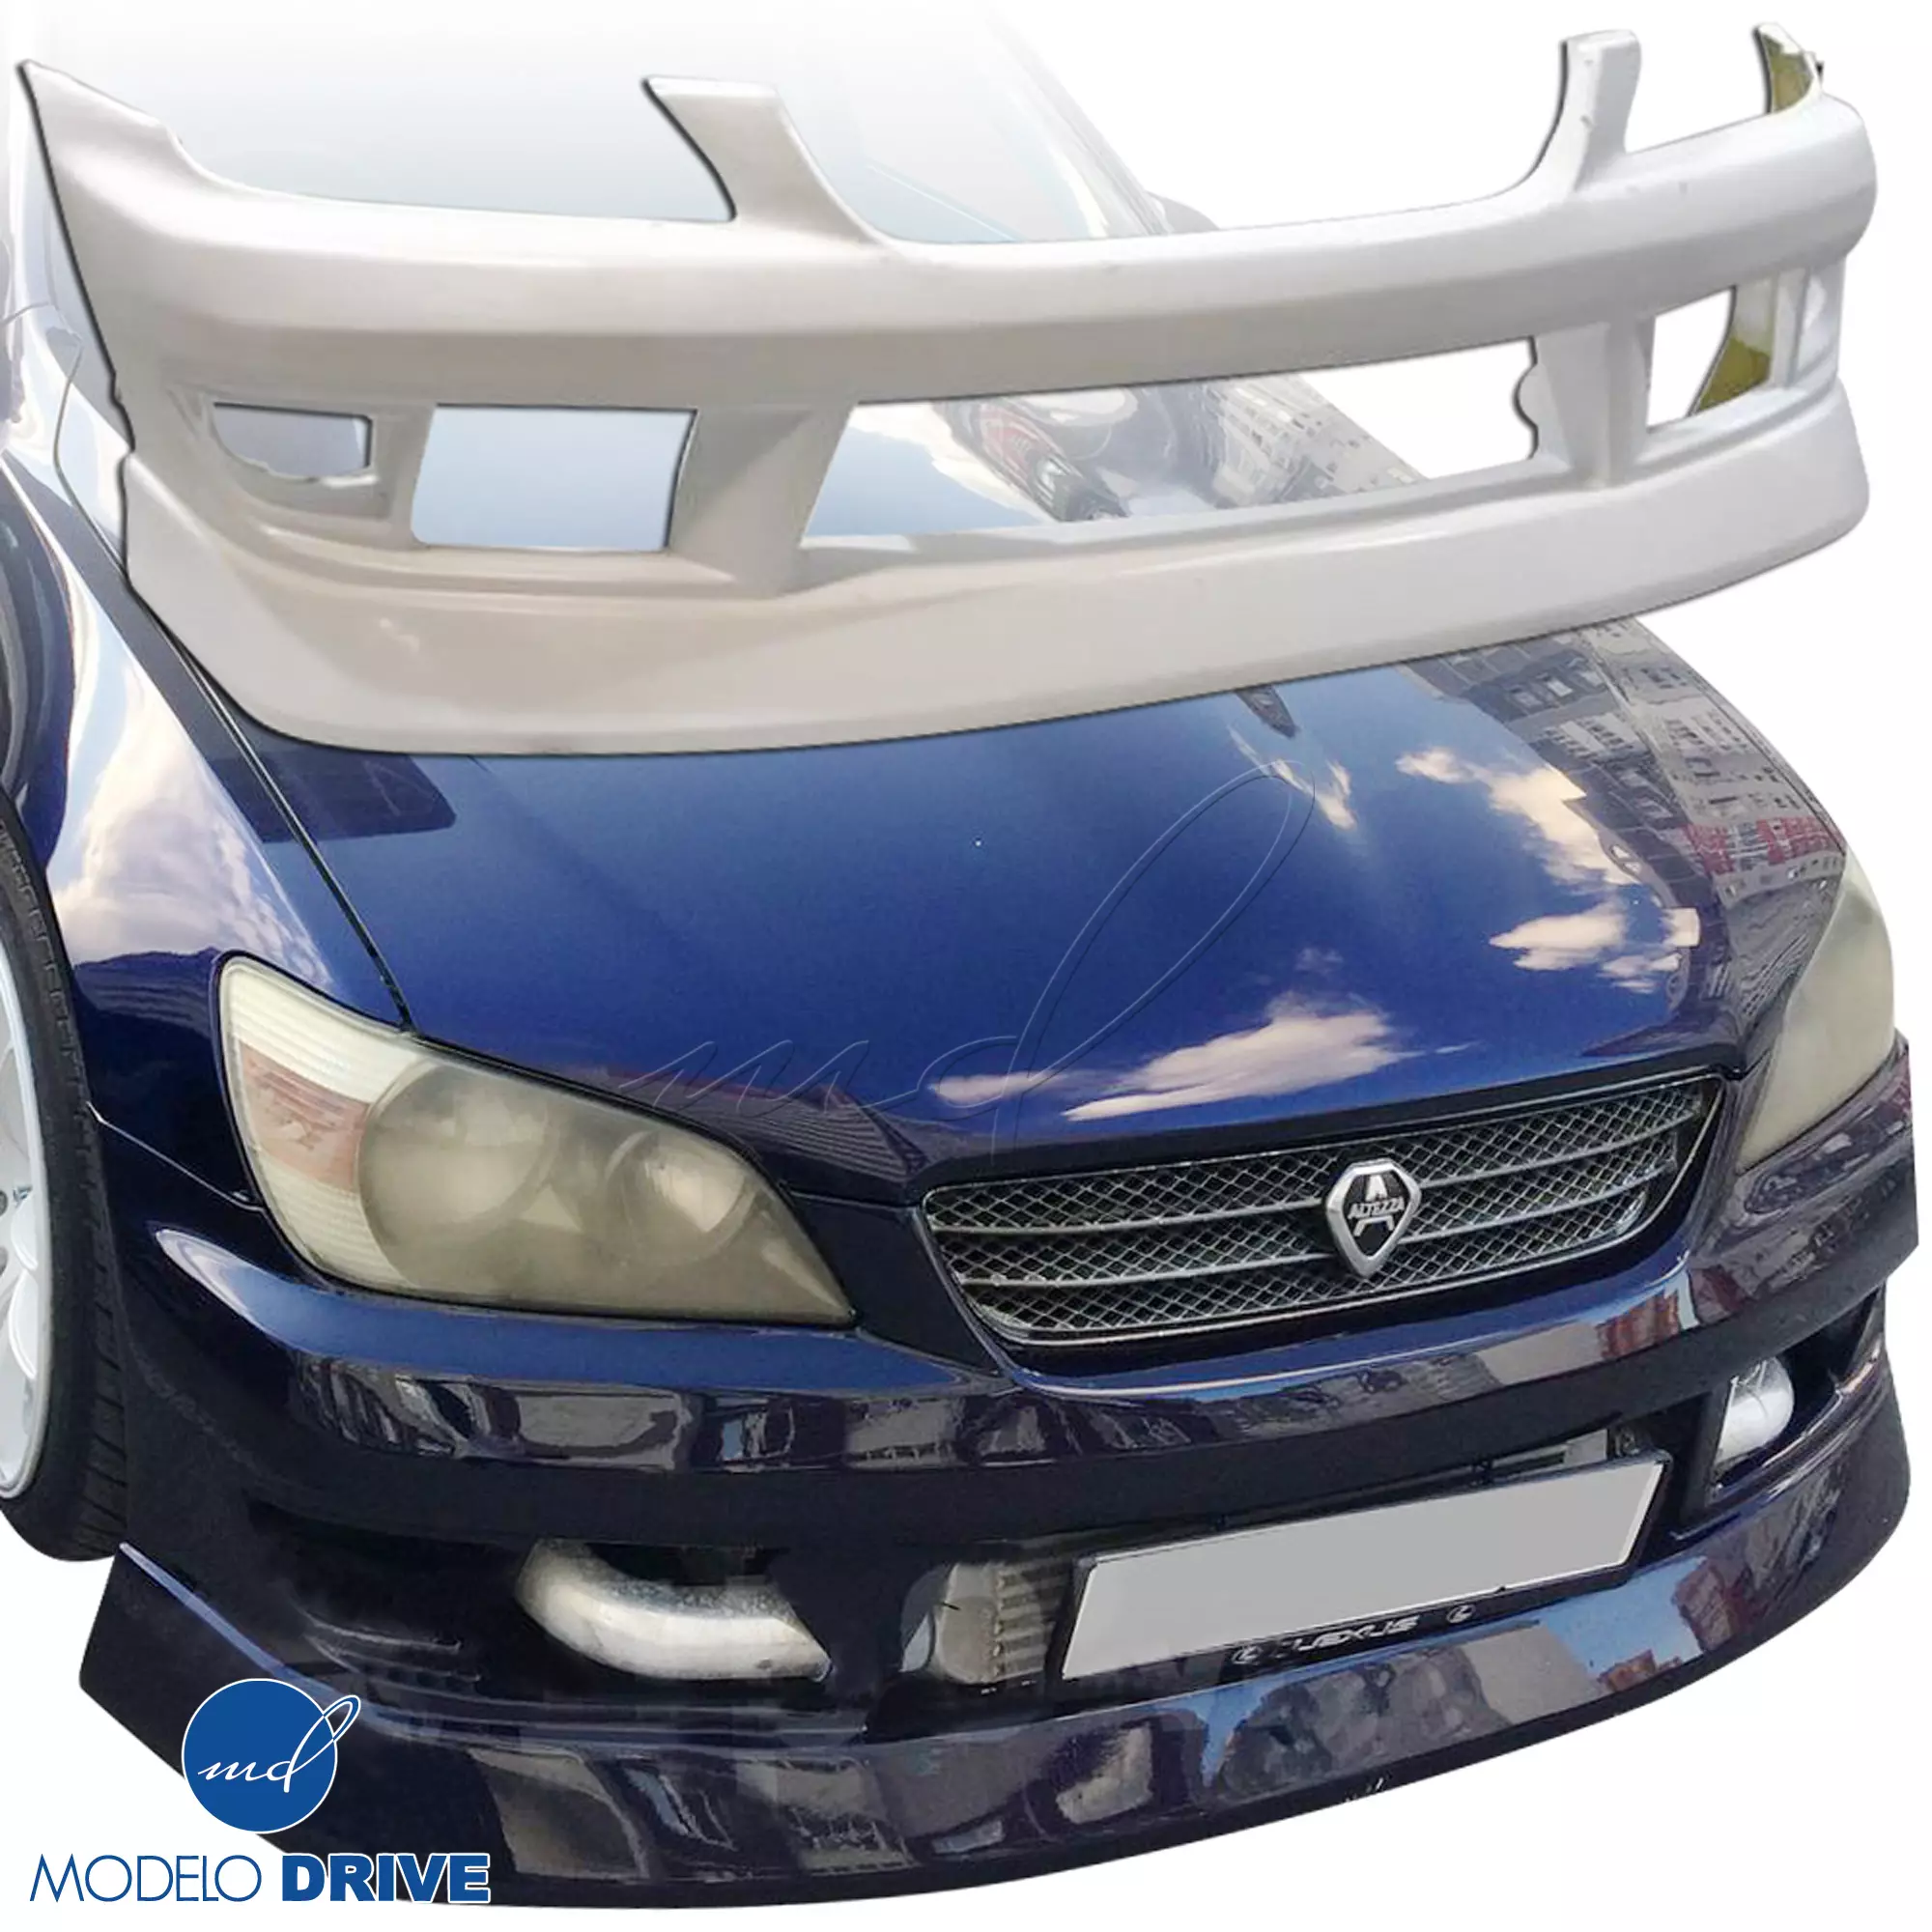 ModeloDrive FRP BSPO Body Kit 4pc > Lexus IS Series IS300 2000-2005> 4dr - Image 9